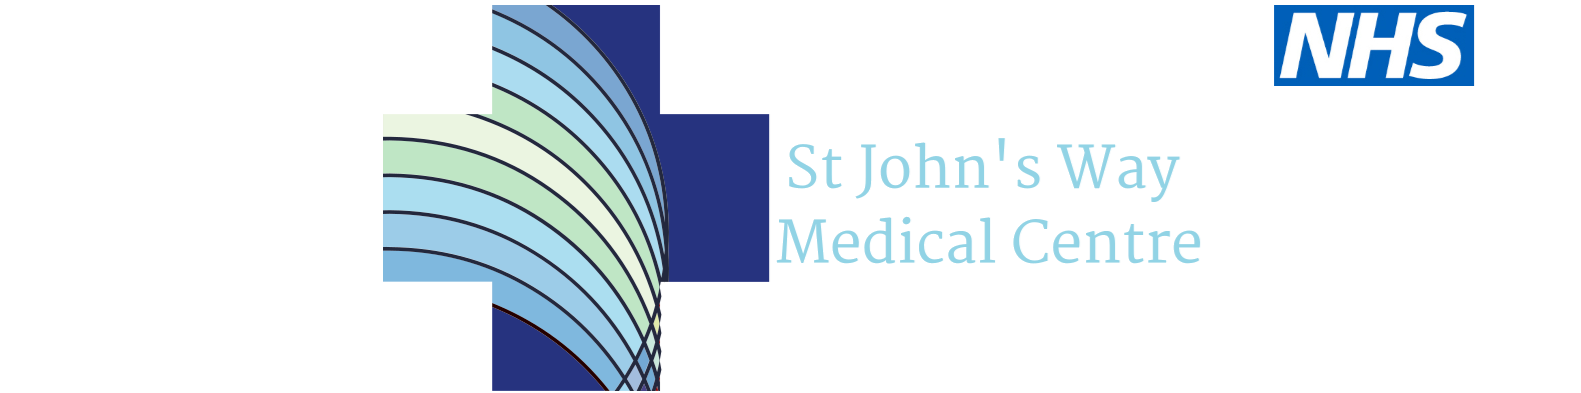 St John's Way Medical Centre Logo